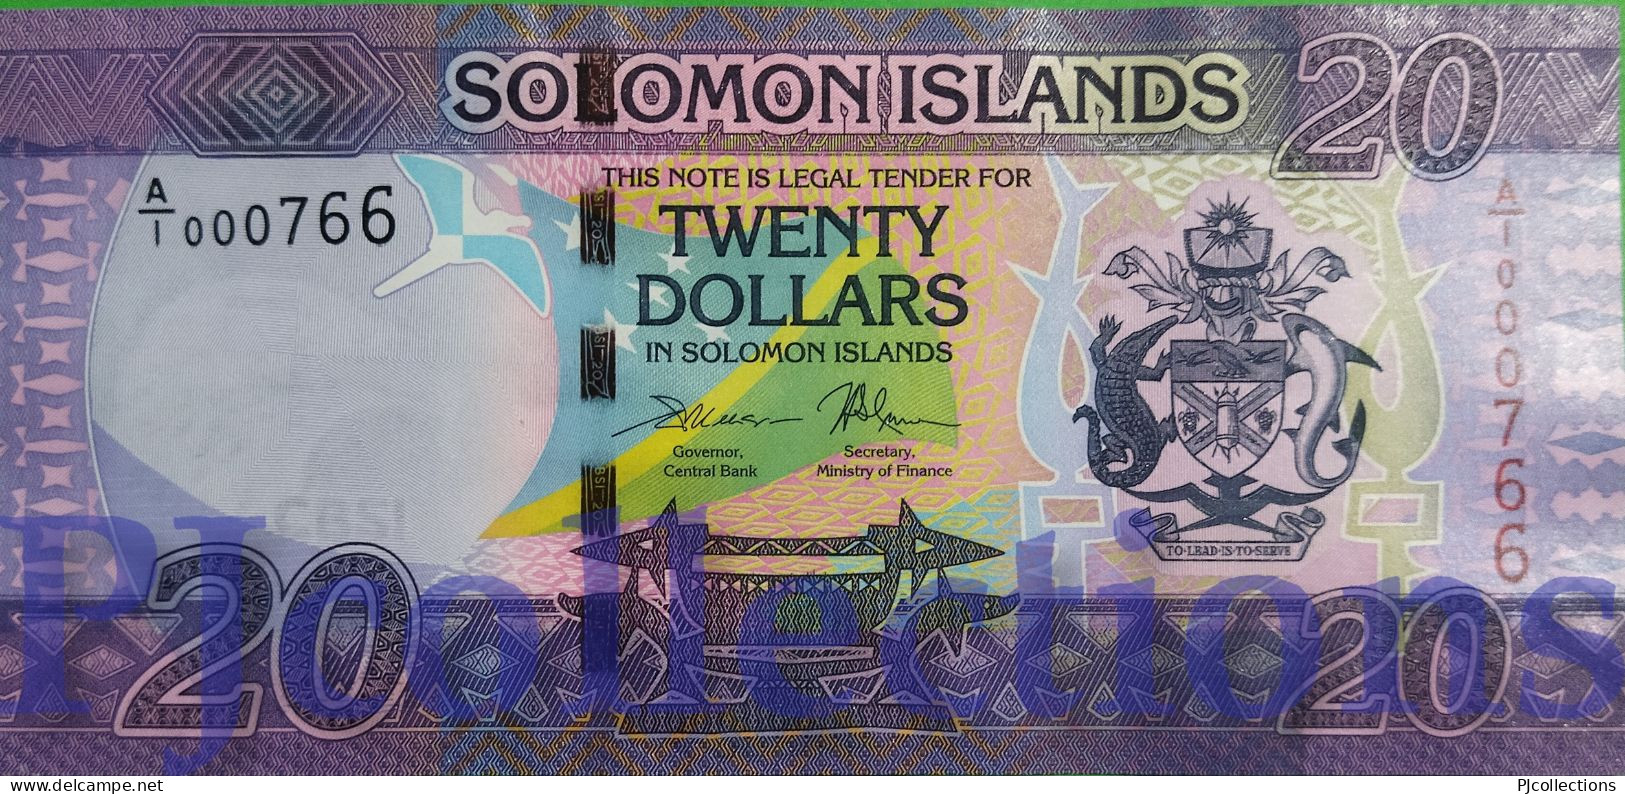 SOLOMON ISLANDS 20 DOLLARS 2017 PICK 34 UNC LOW SERIAL NUMBER "A/1 000766" - Solomon Islands